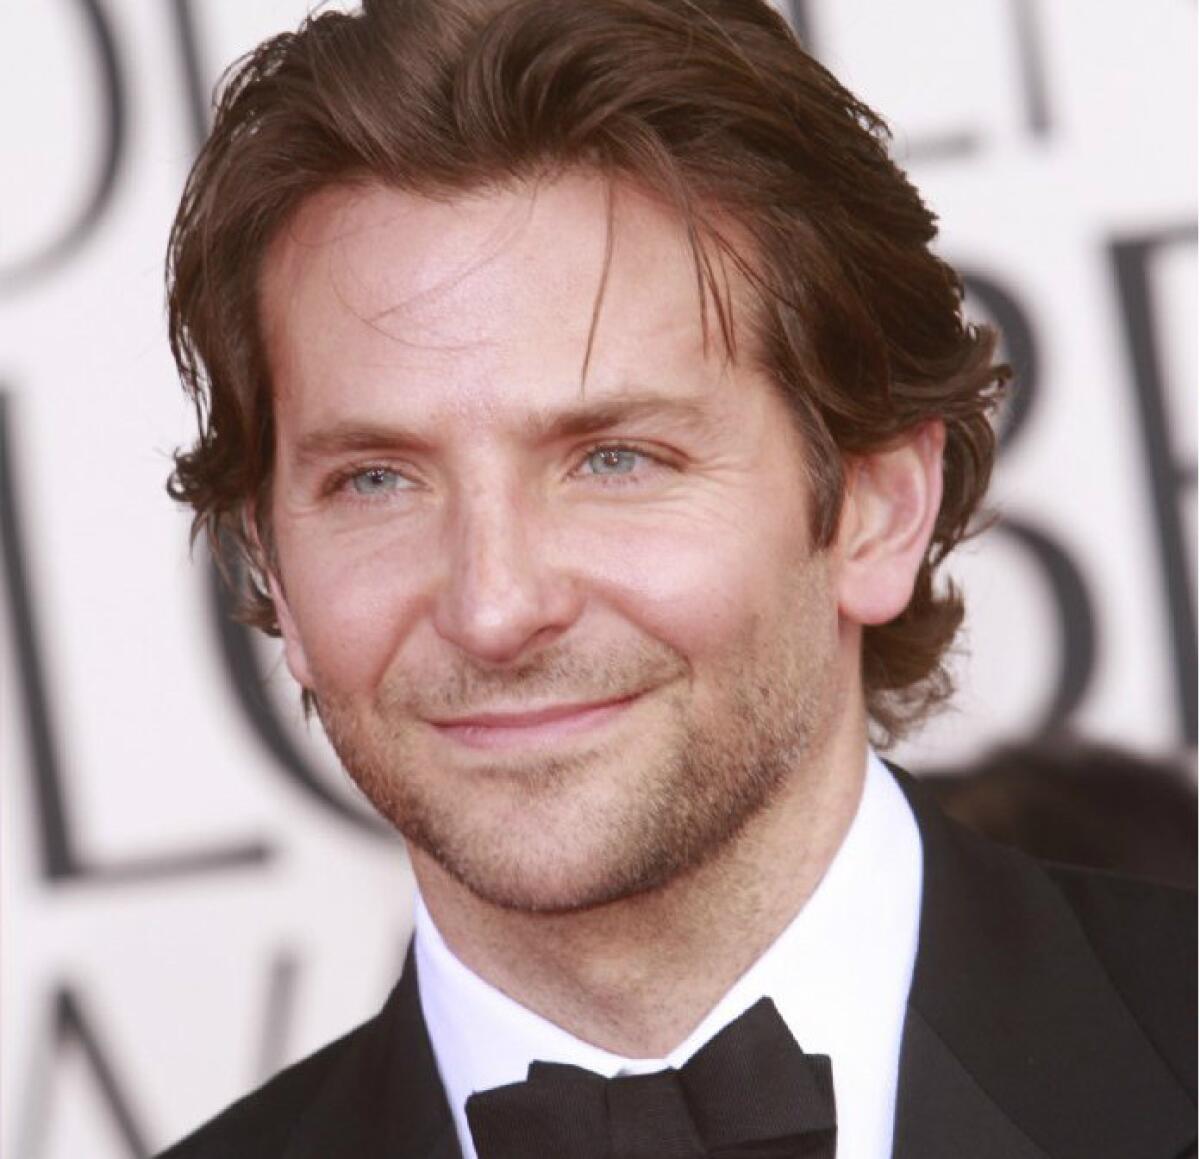 Bradley Cooper will star as U.S. sniper Chris Kyle in Steven Spielberg's coming film.